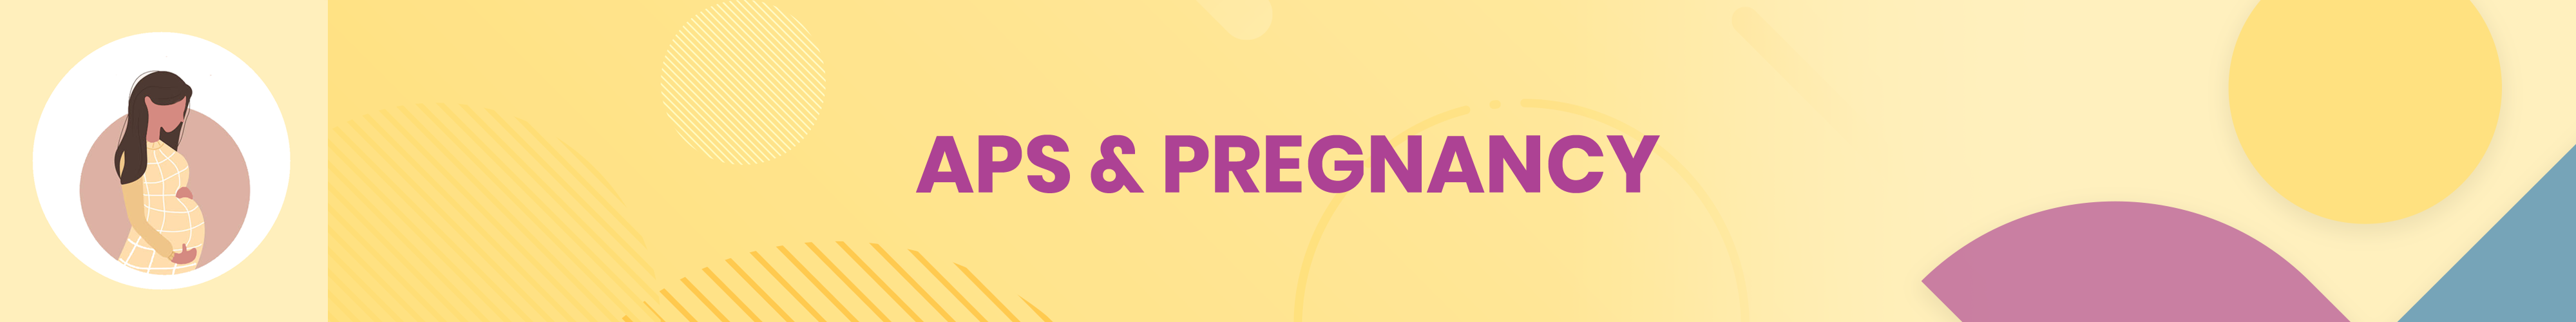 APS & Pregnancy header